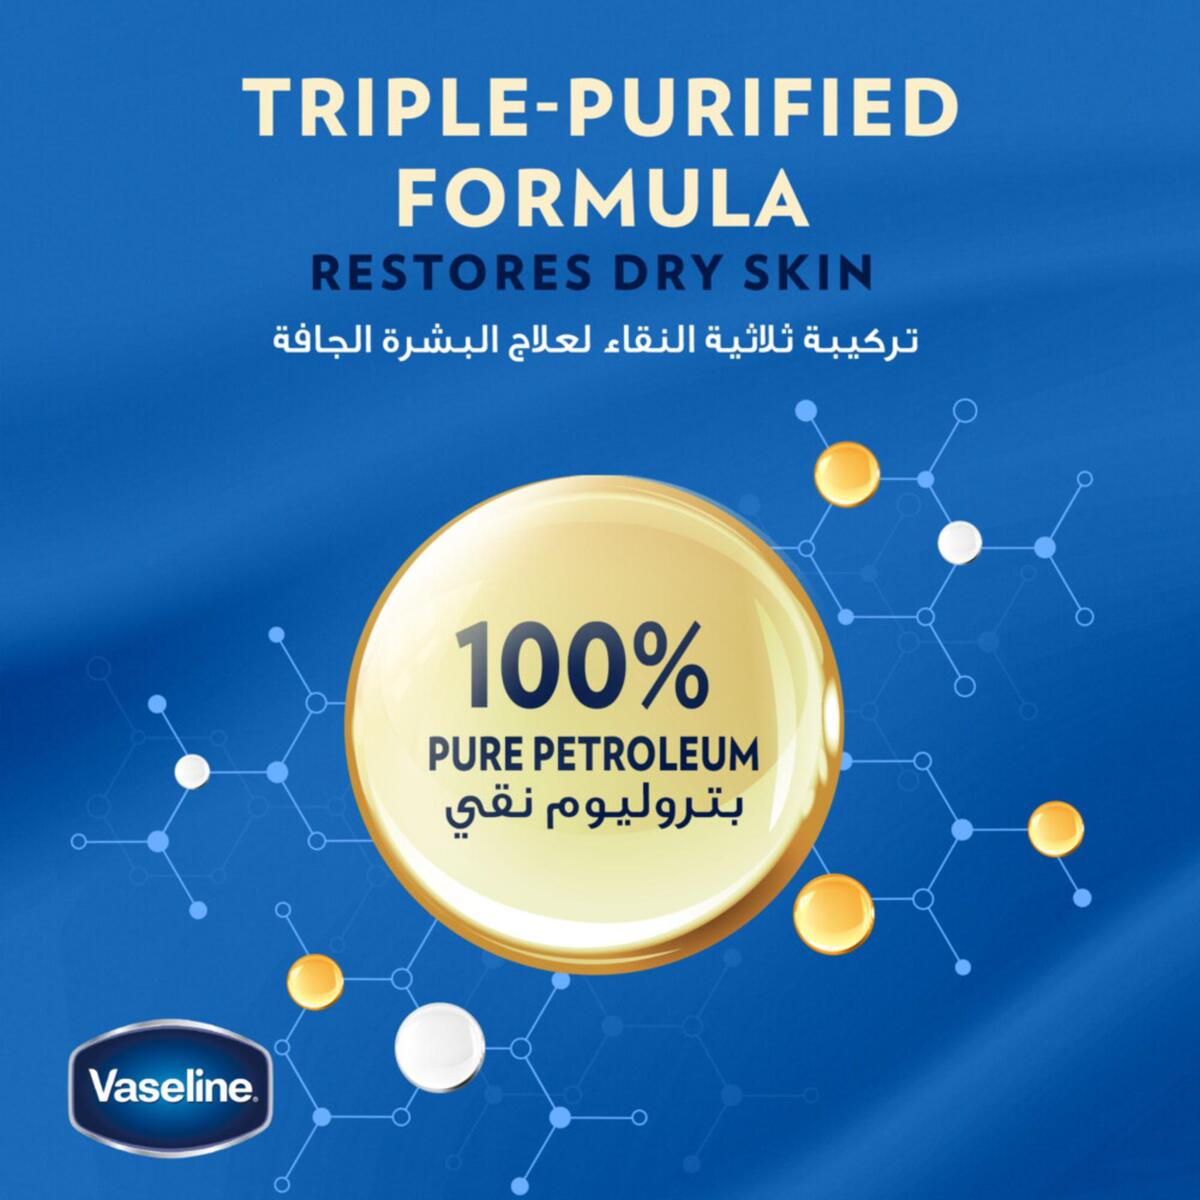 Vaseline Petroleum Jelly Original 450 ml